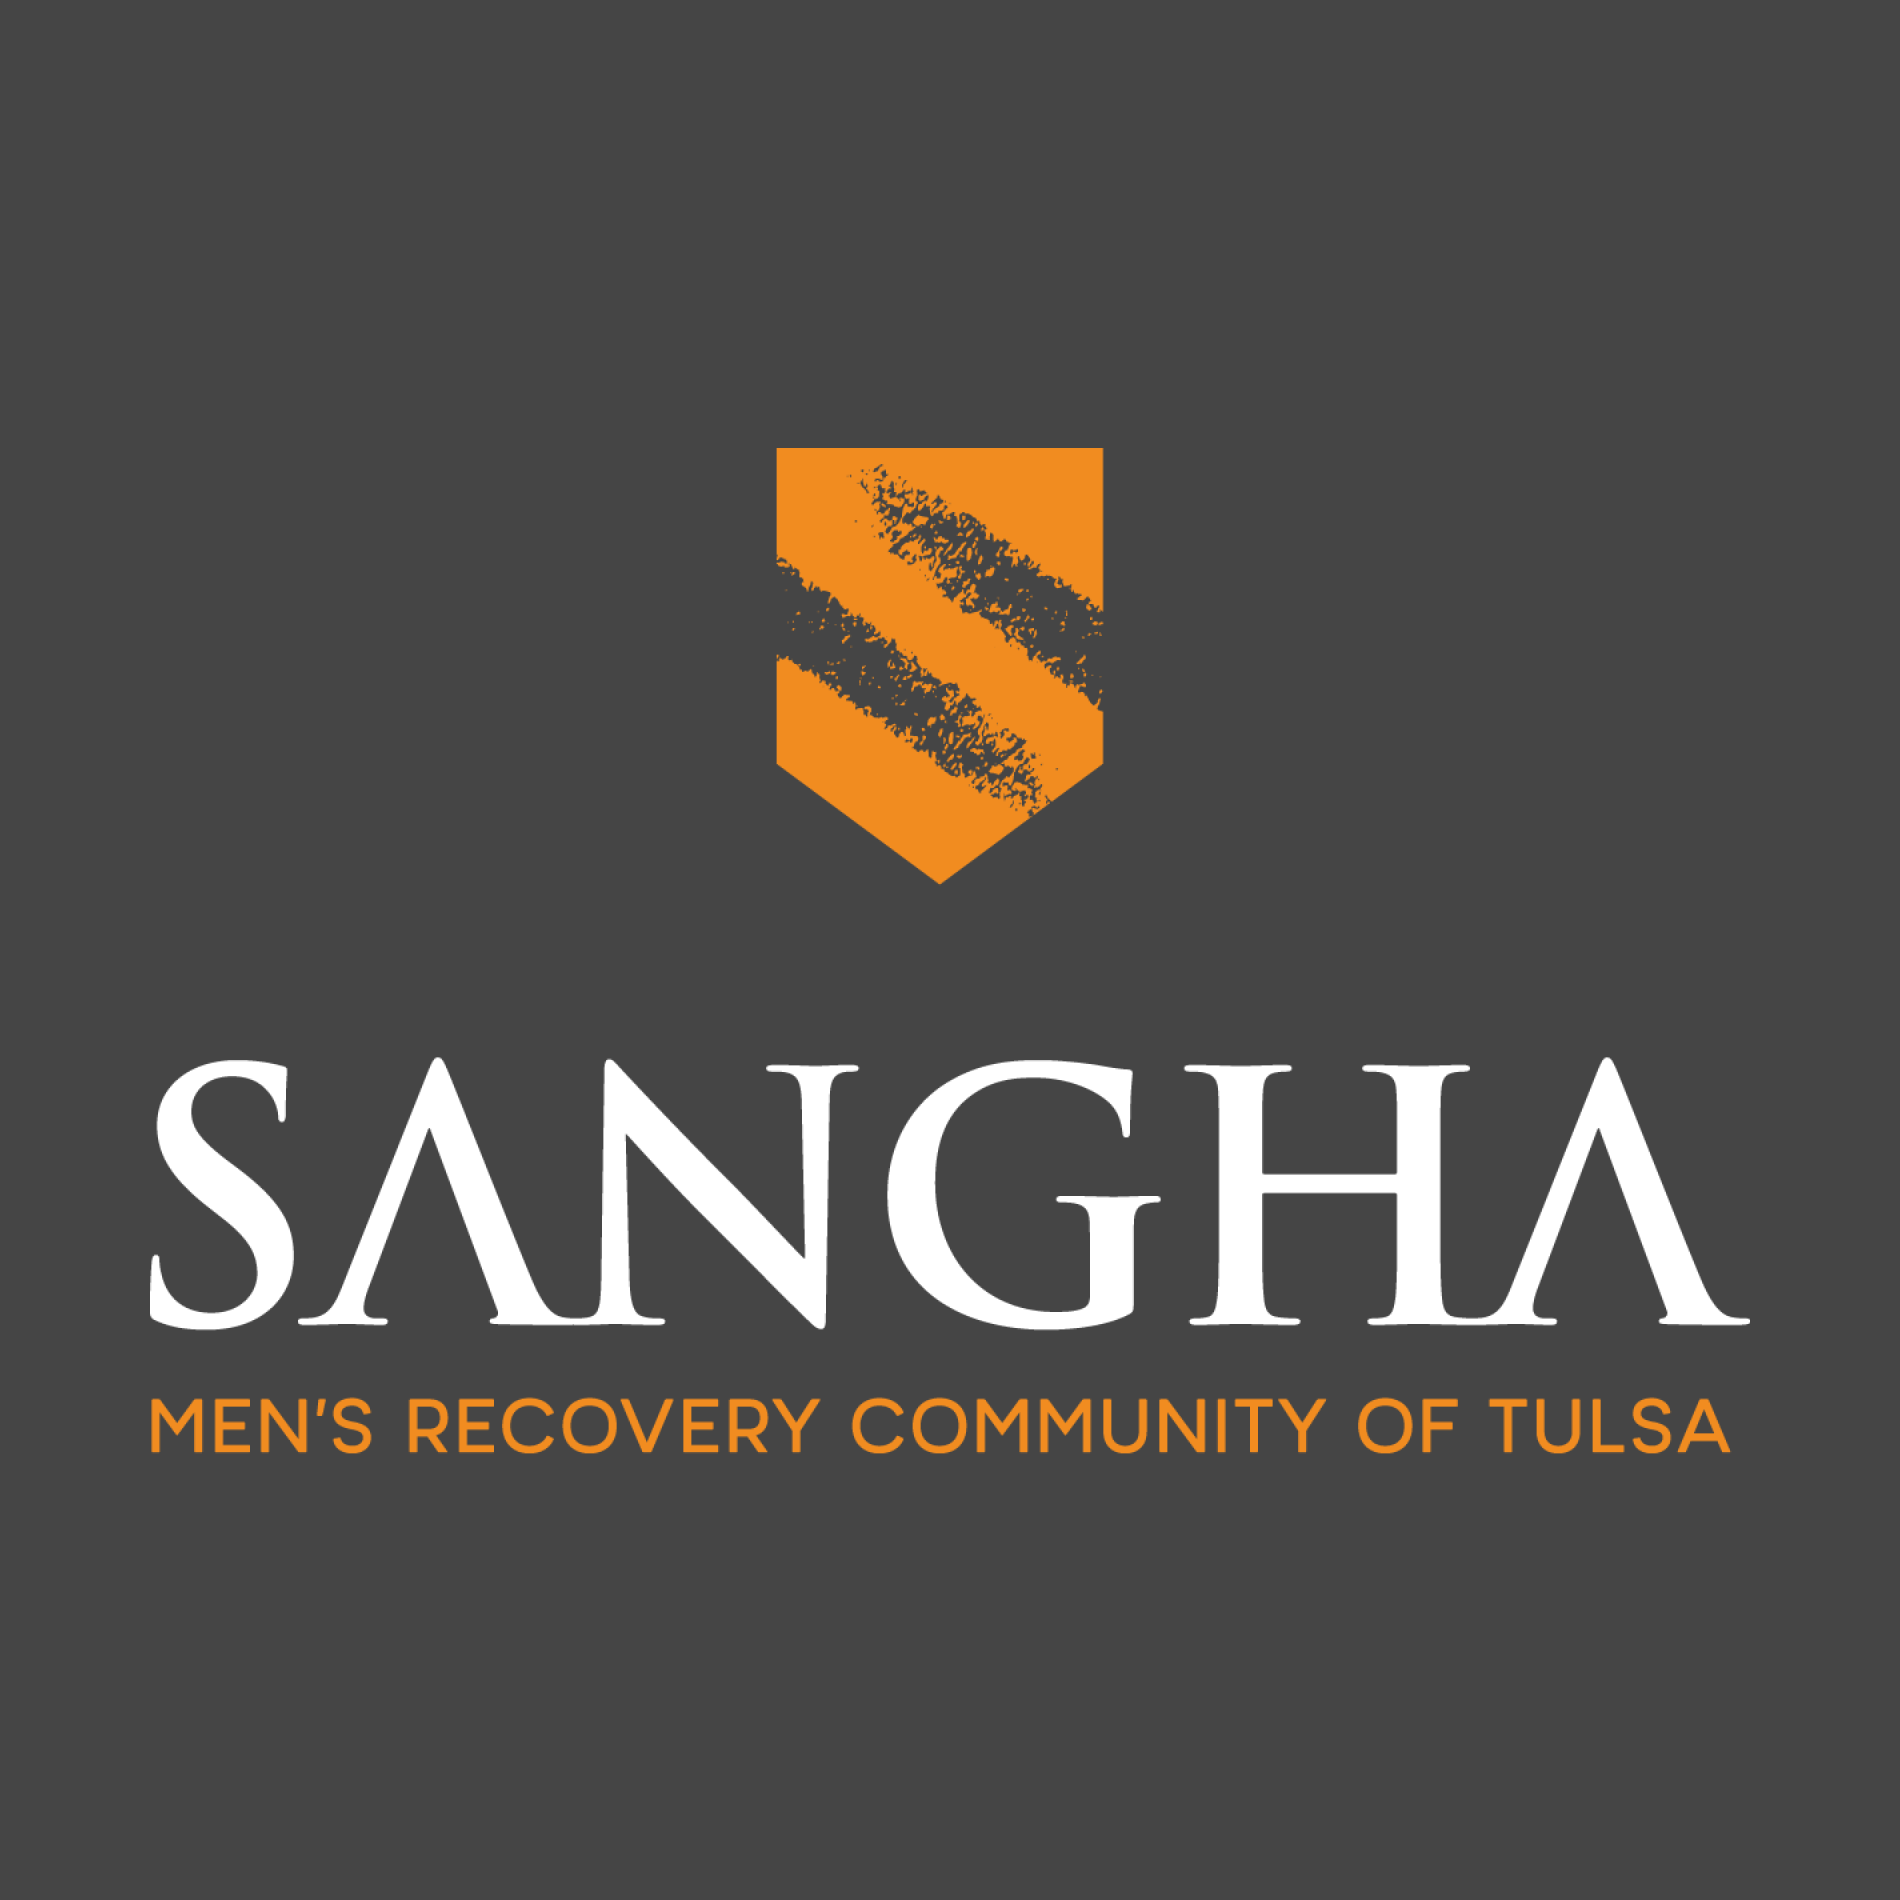 Sangha Men’s Recovery Community